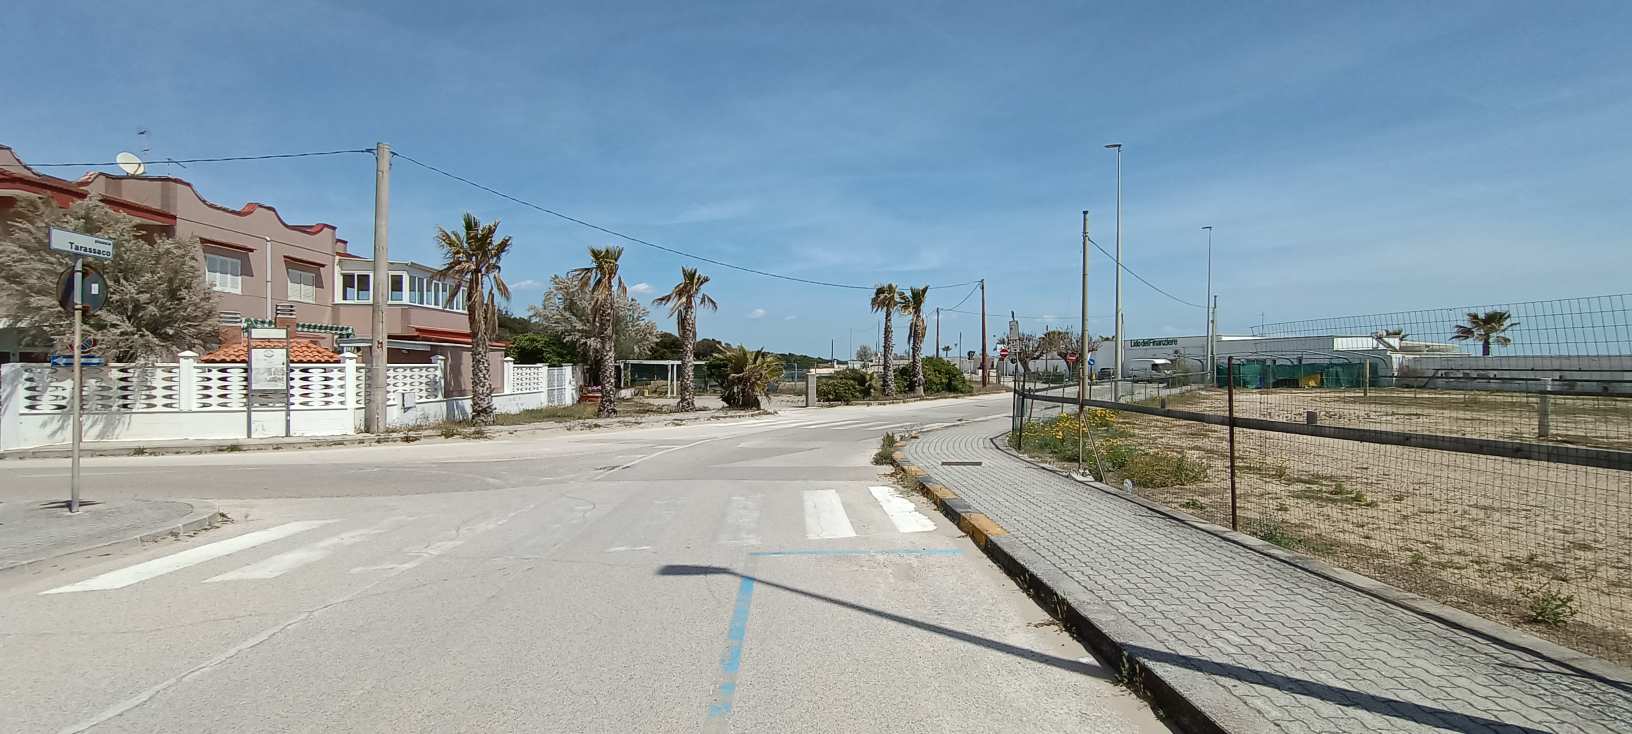 Golfo di Taranto